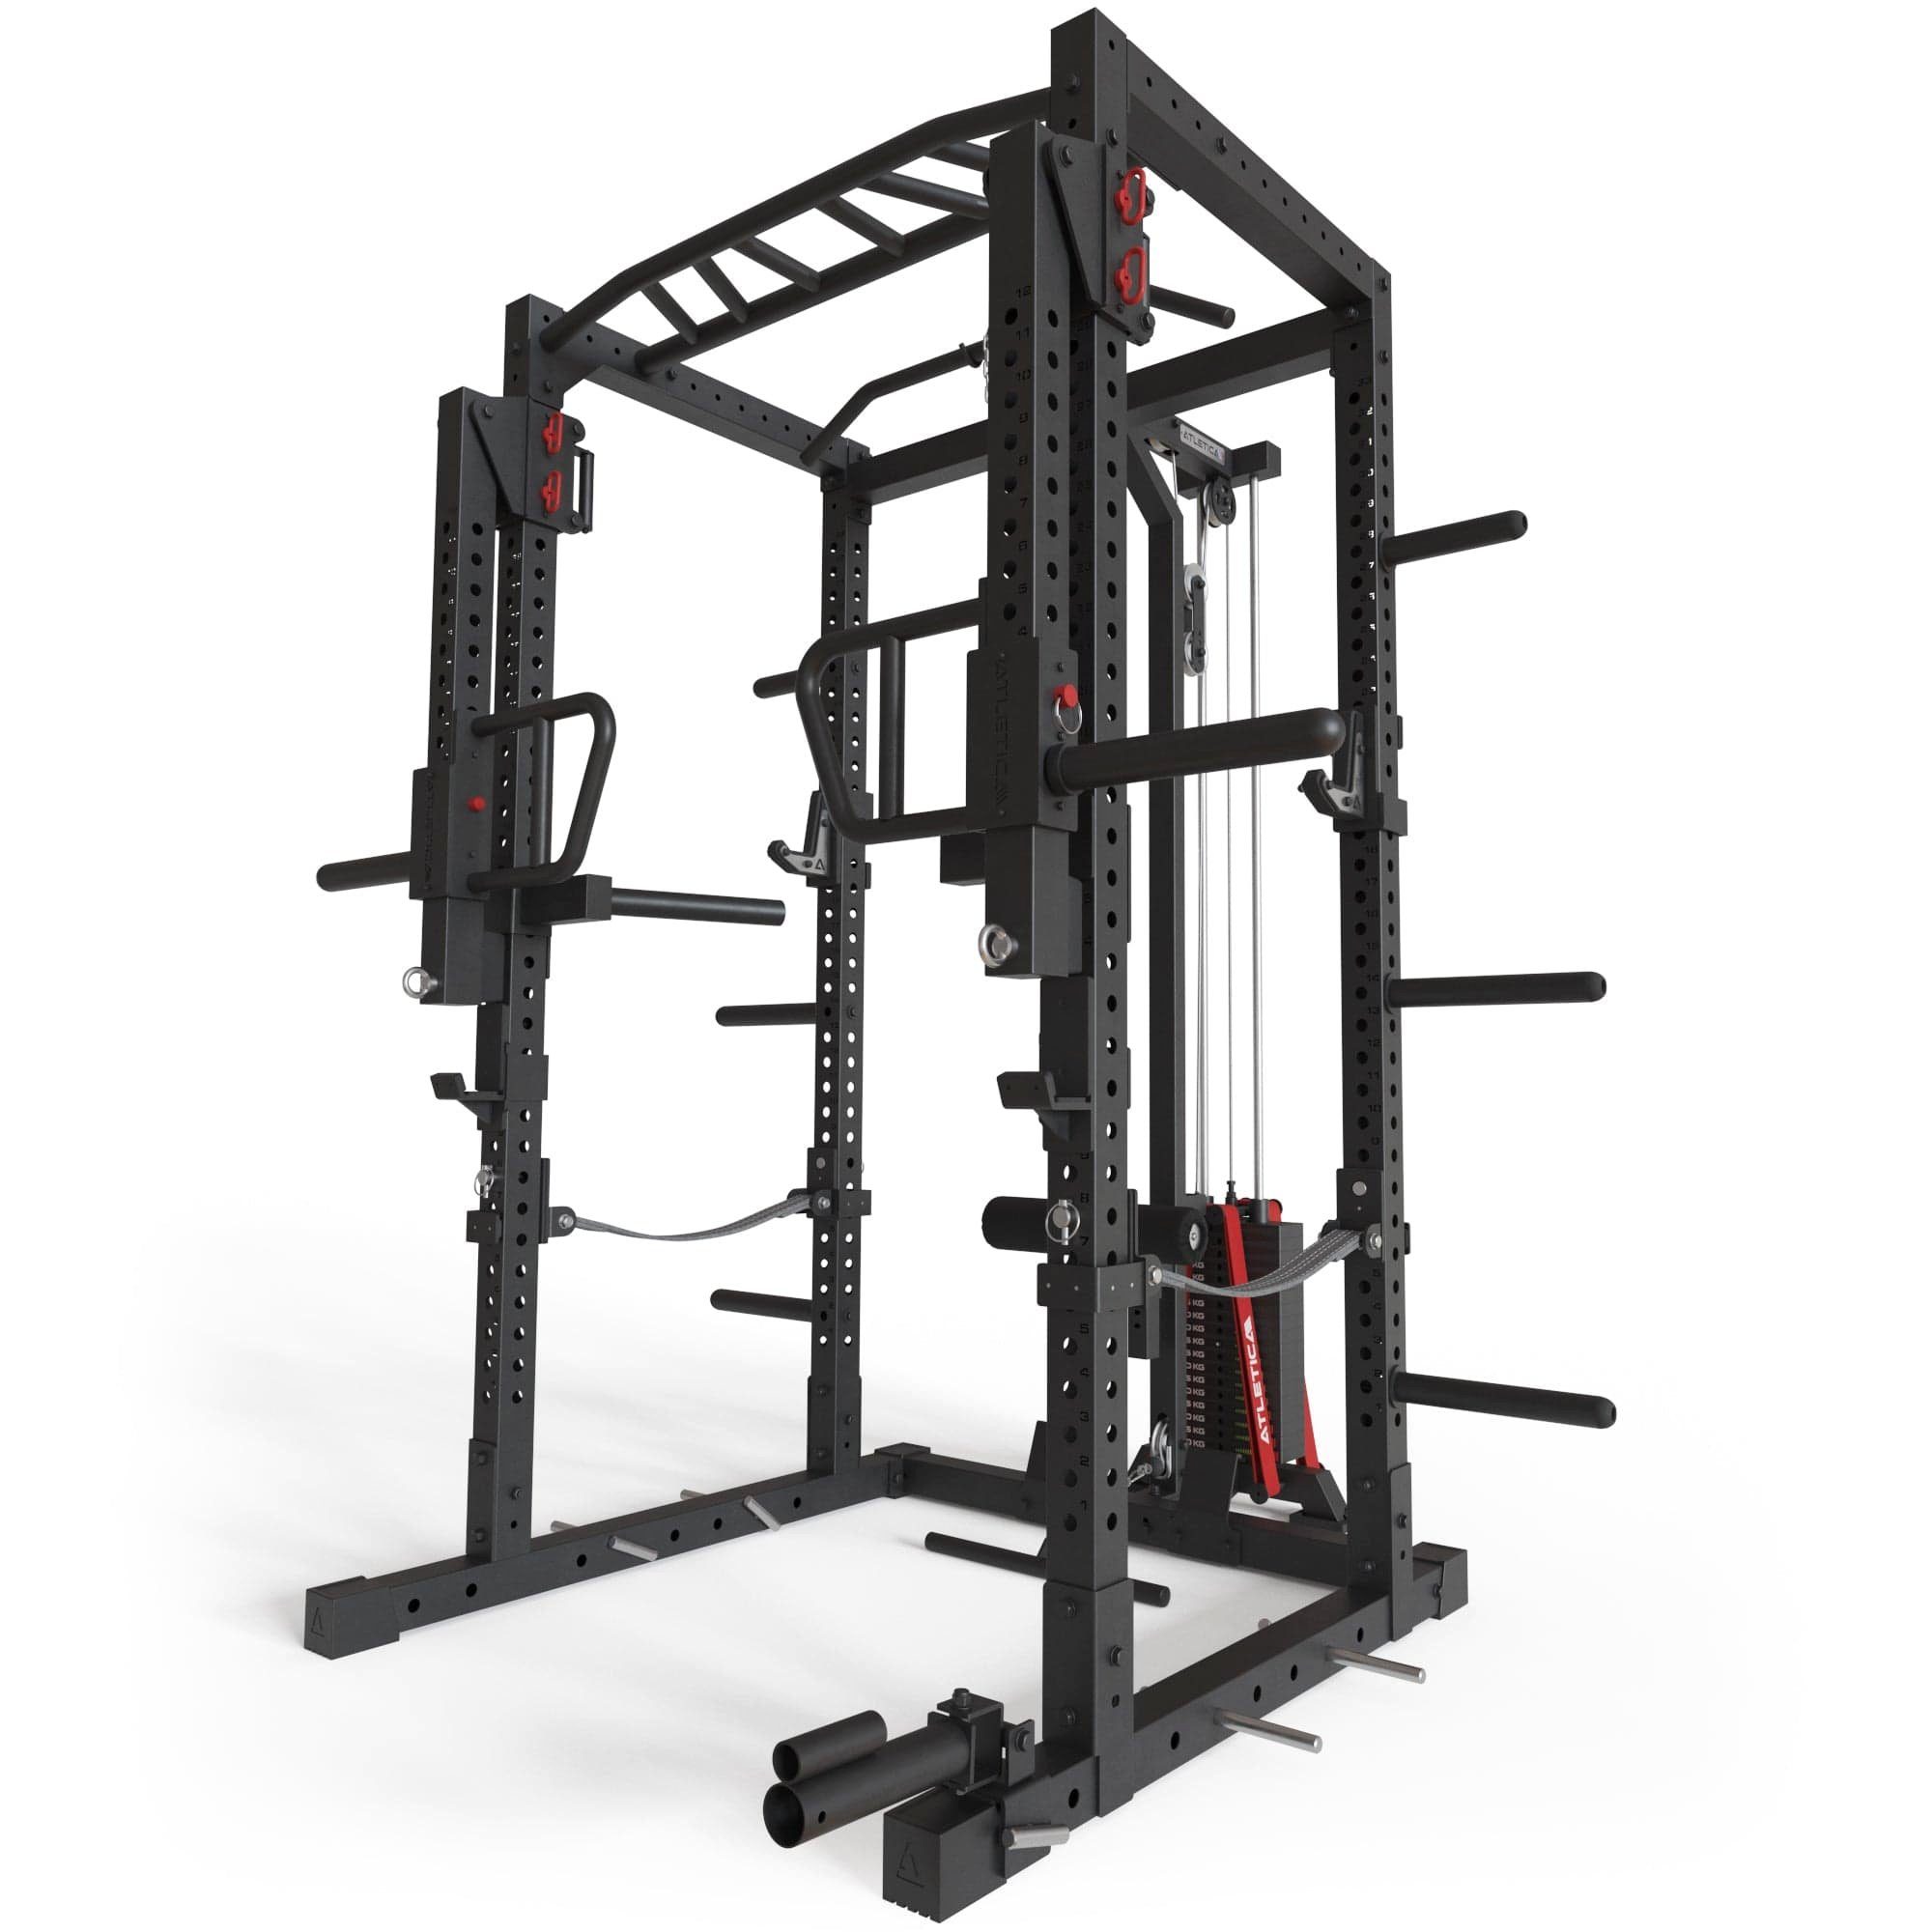 ATLETICA Power Rack R7-Helix Power Rack, 90kg oder 120kg Stack Weight